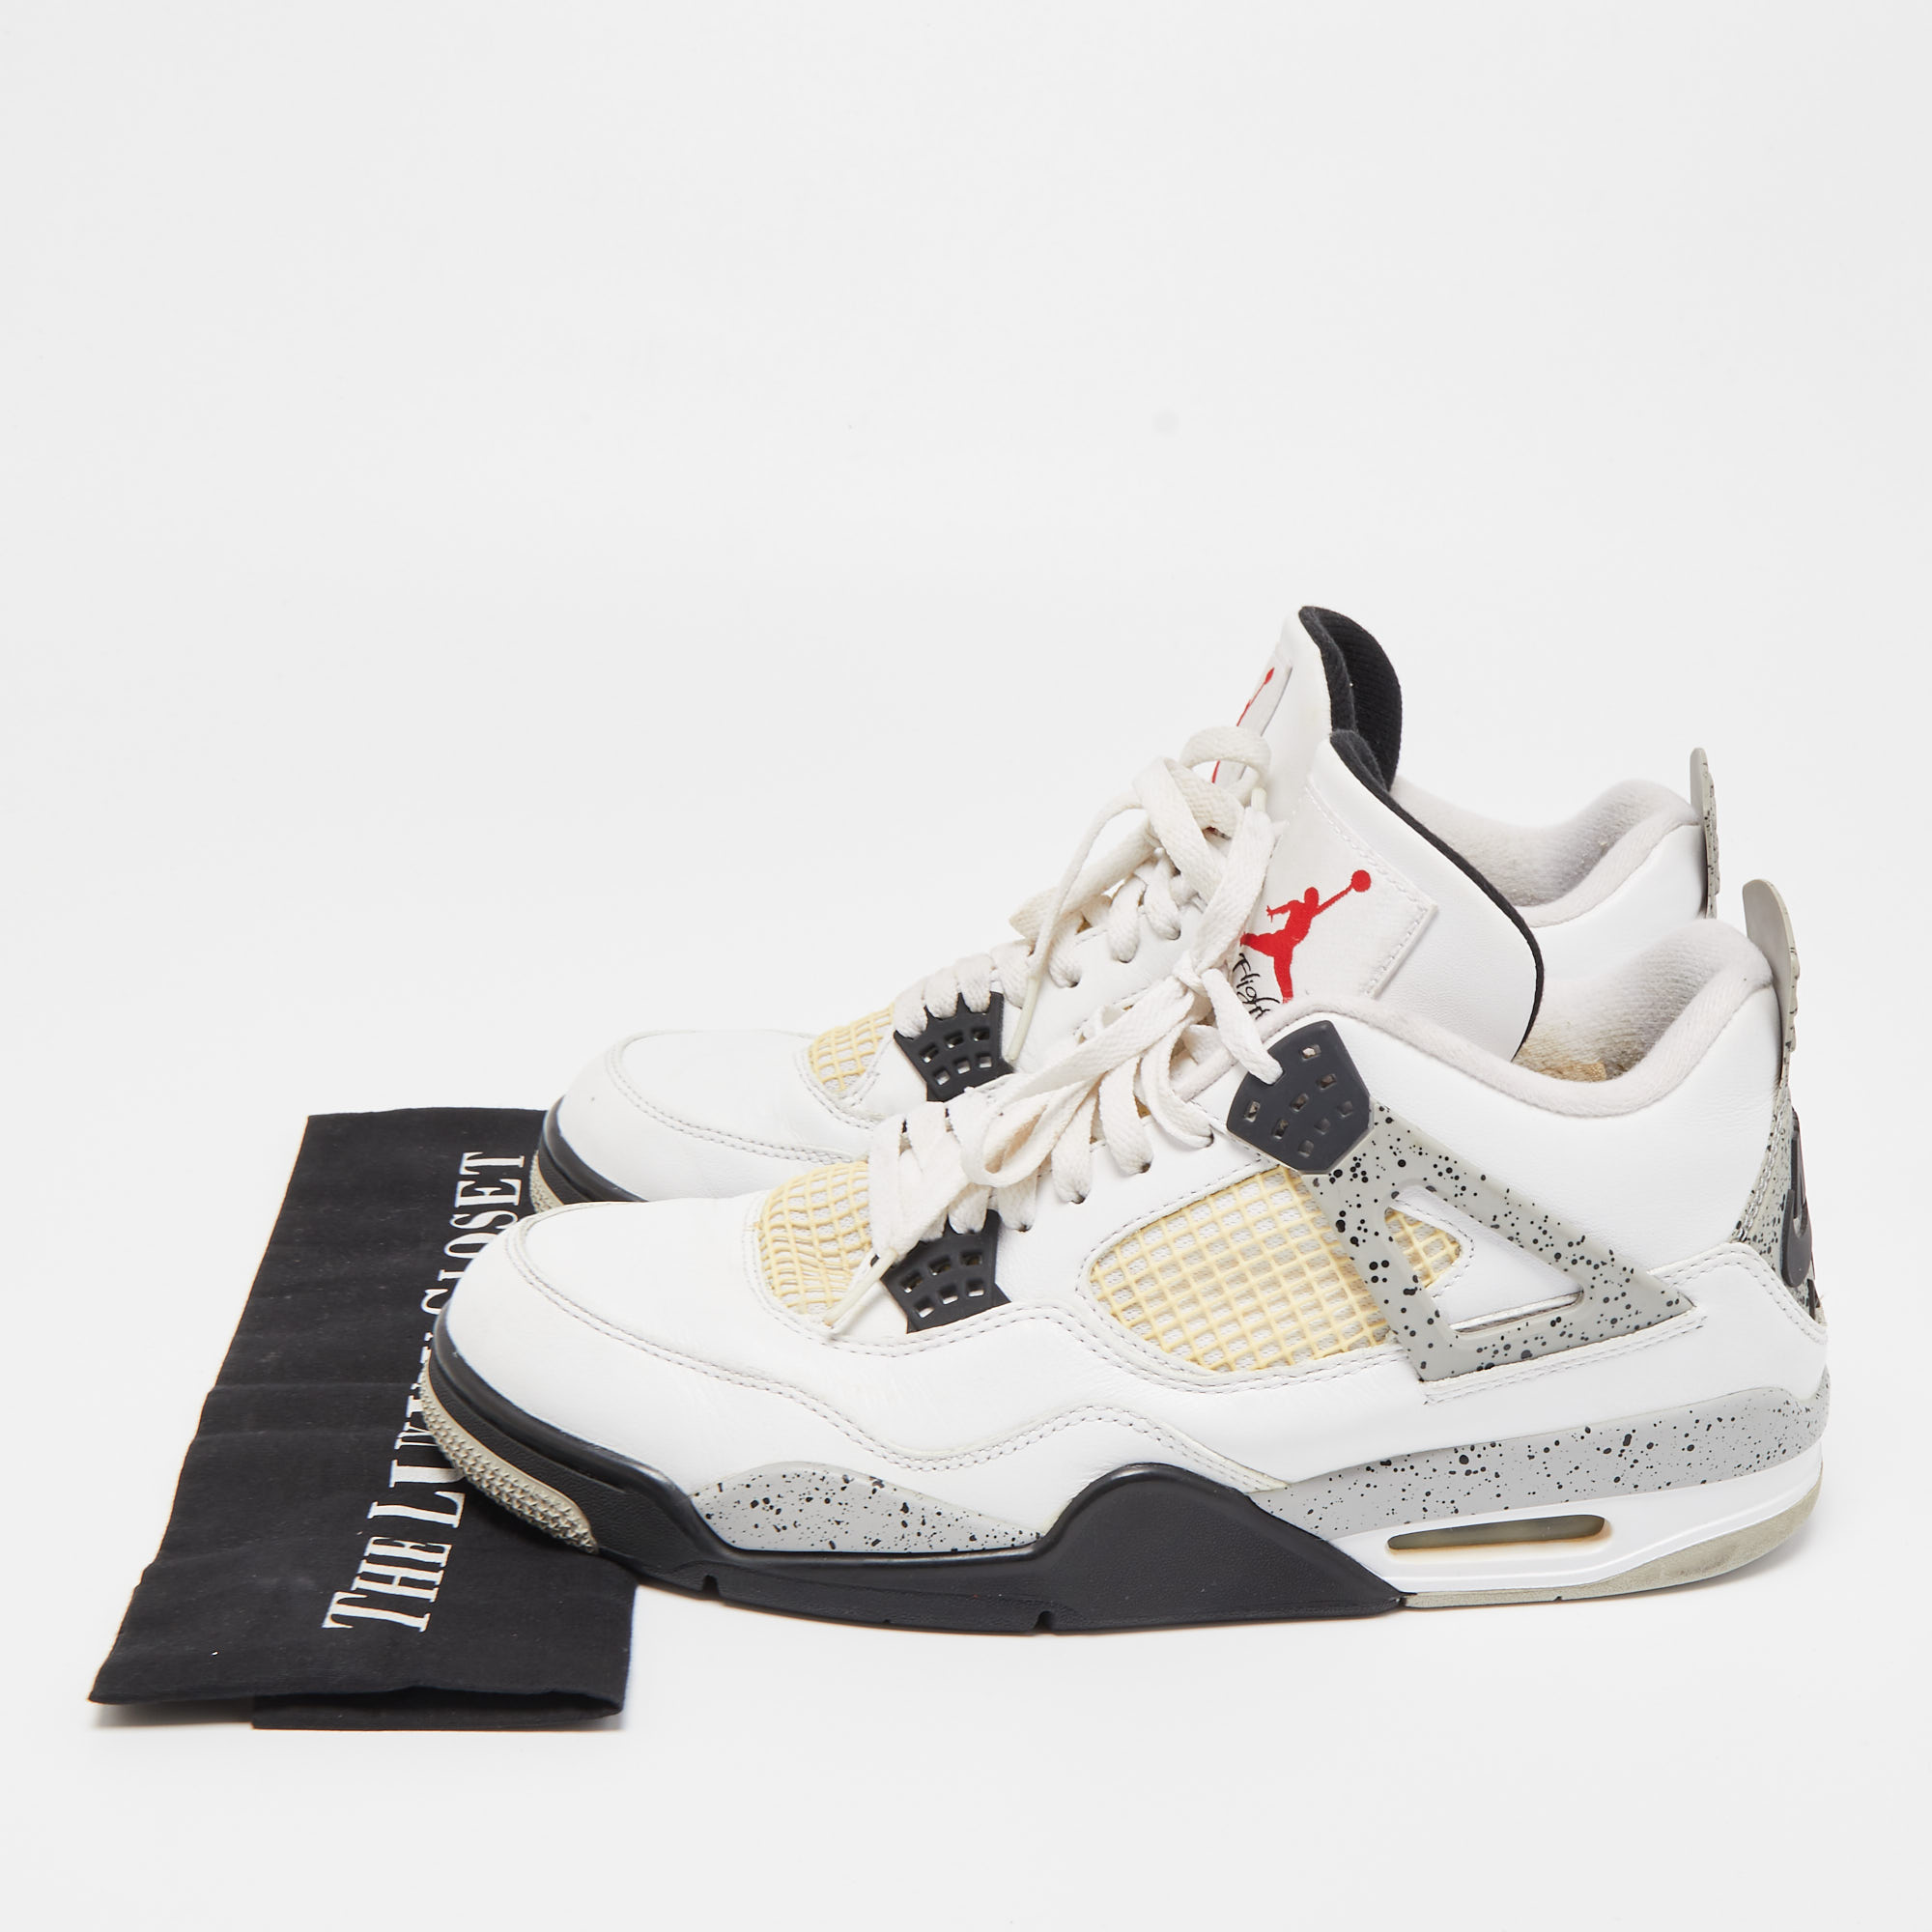 Air Jordans White Leather Jordan 4 Retro White Cement Sneakers Size 45